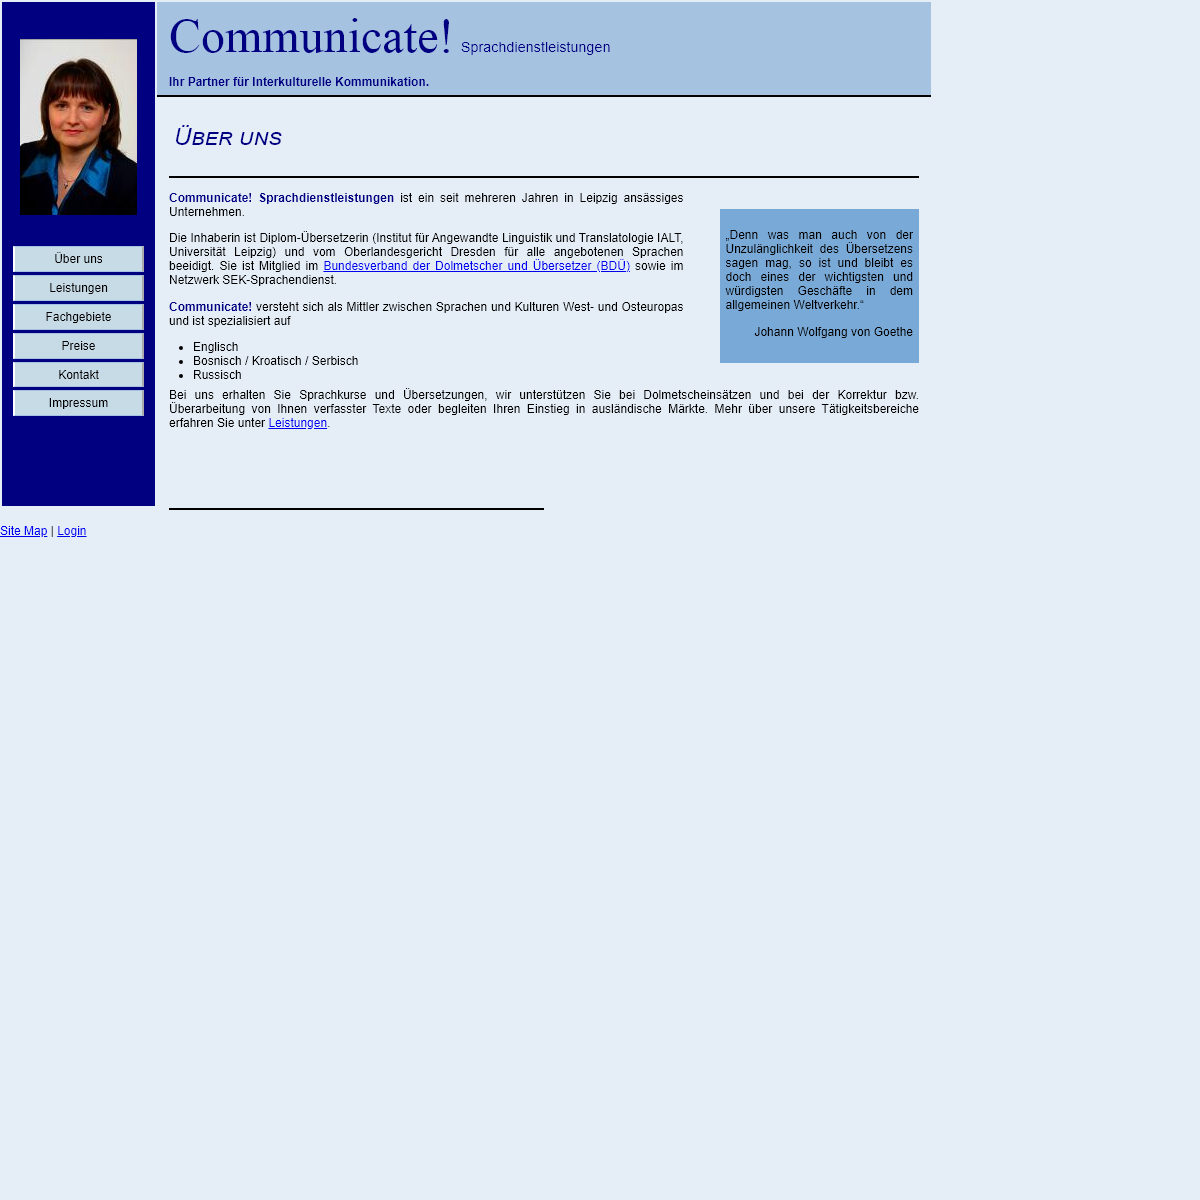 A complete backup of communicate-sdl.de